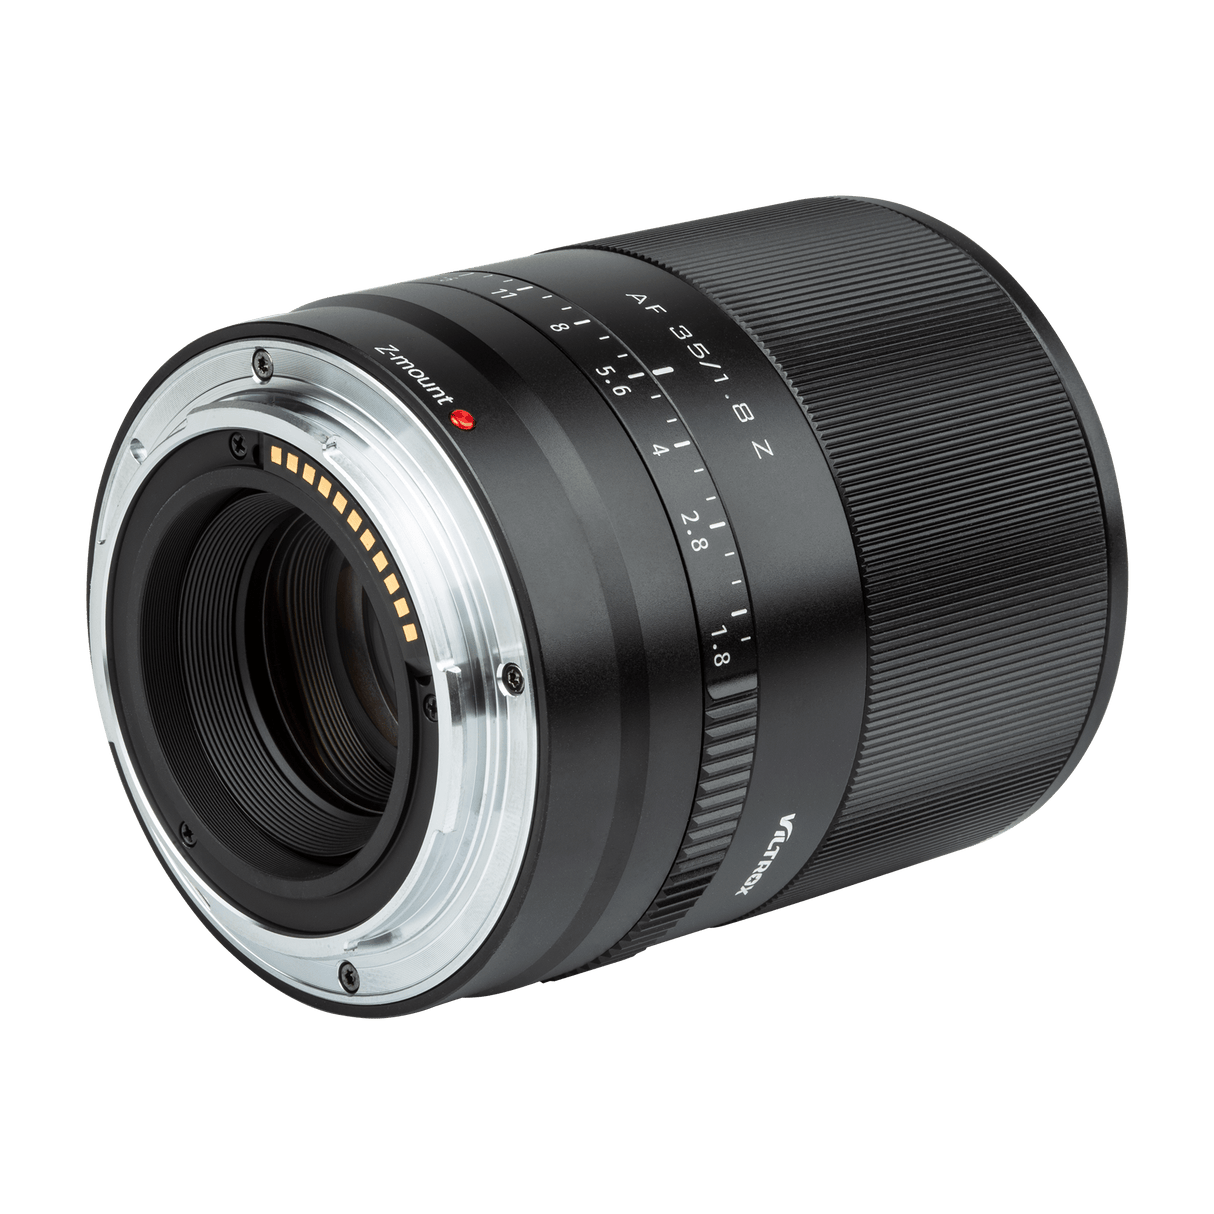 Rollei Objektive Objektiv AF 35 mm F/1.8 mit Nikon Z-Mount